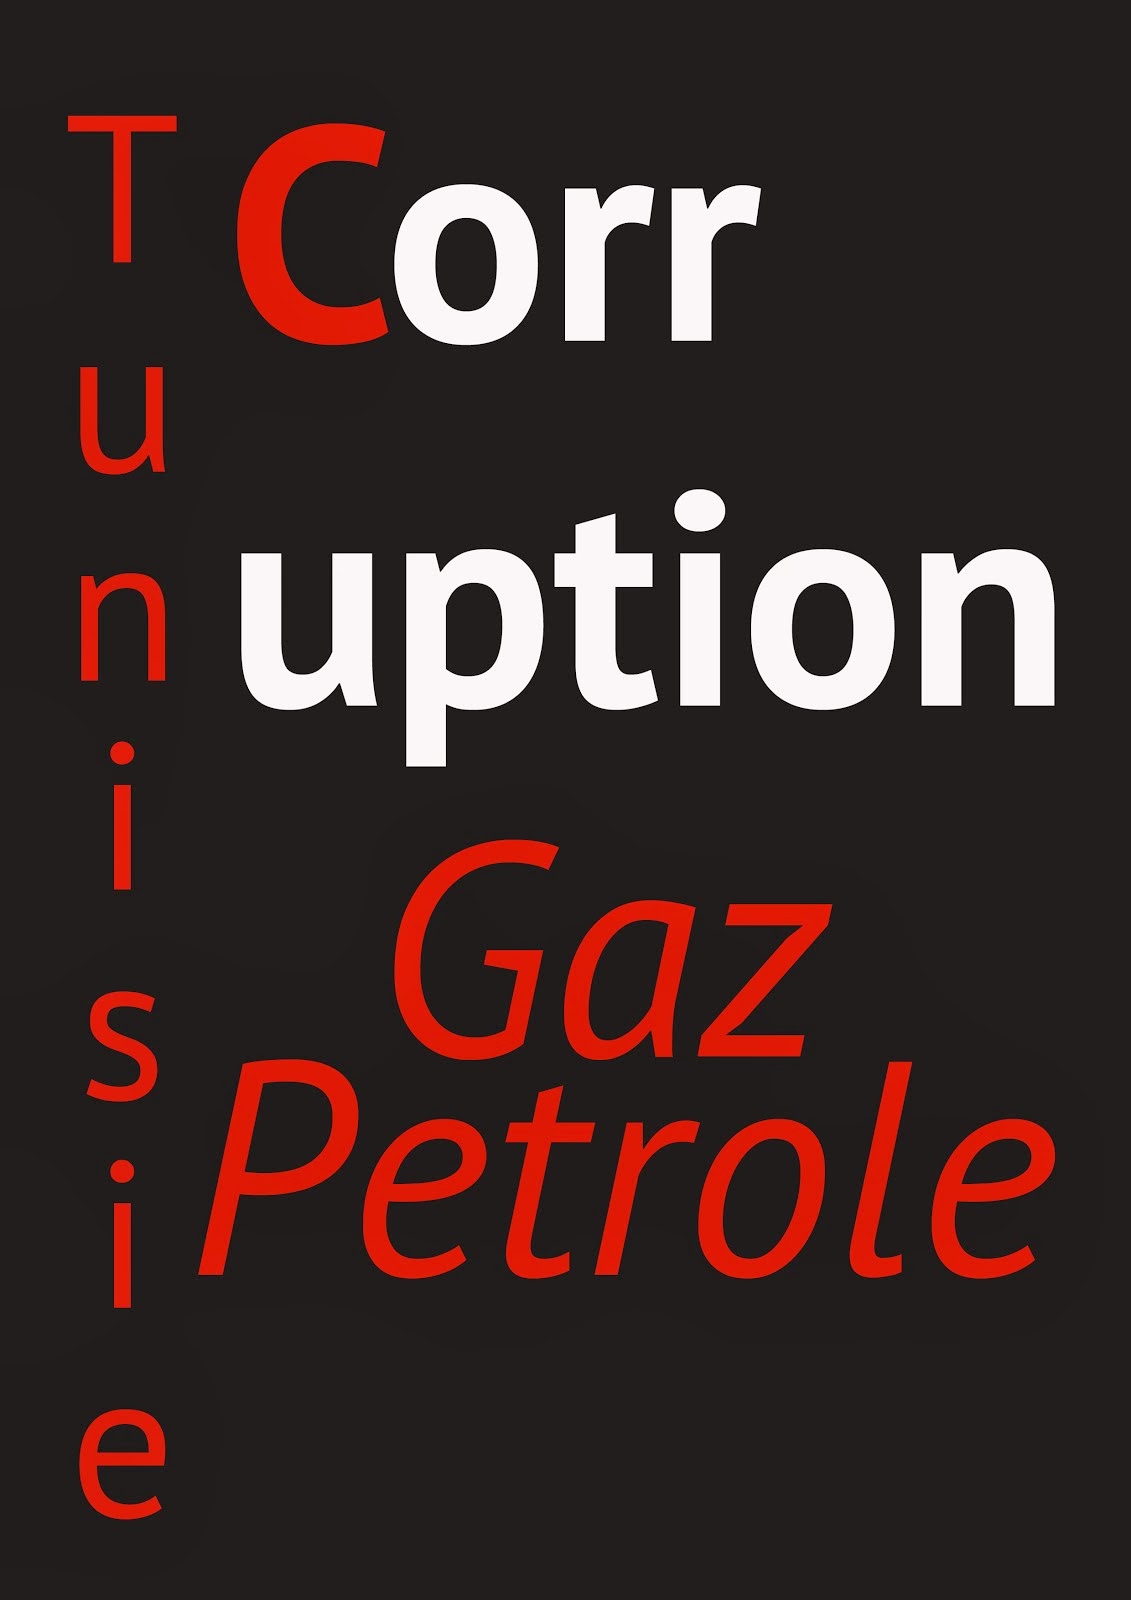 PDF - corruption petrole gaz